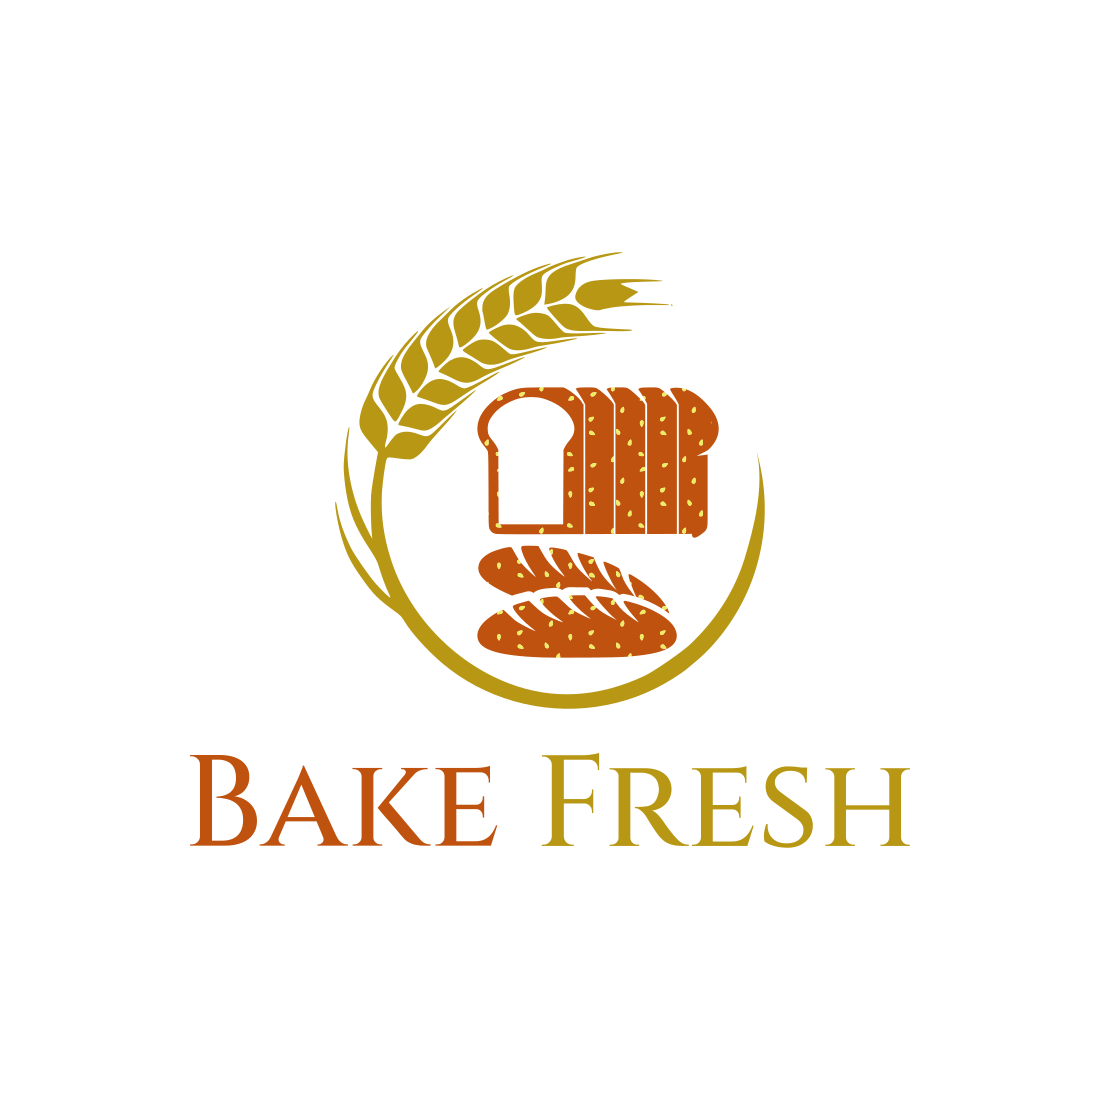 Custom Design Bake Shop Logo cover image.